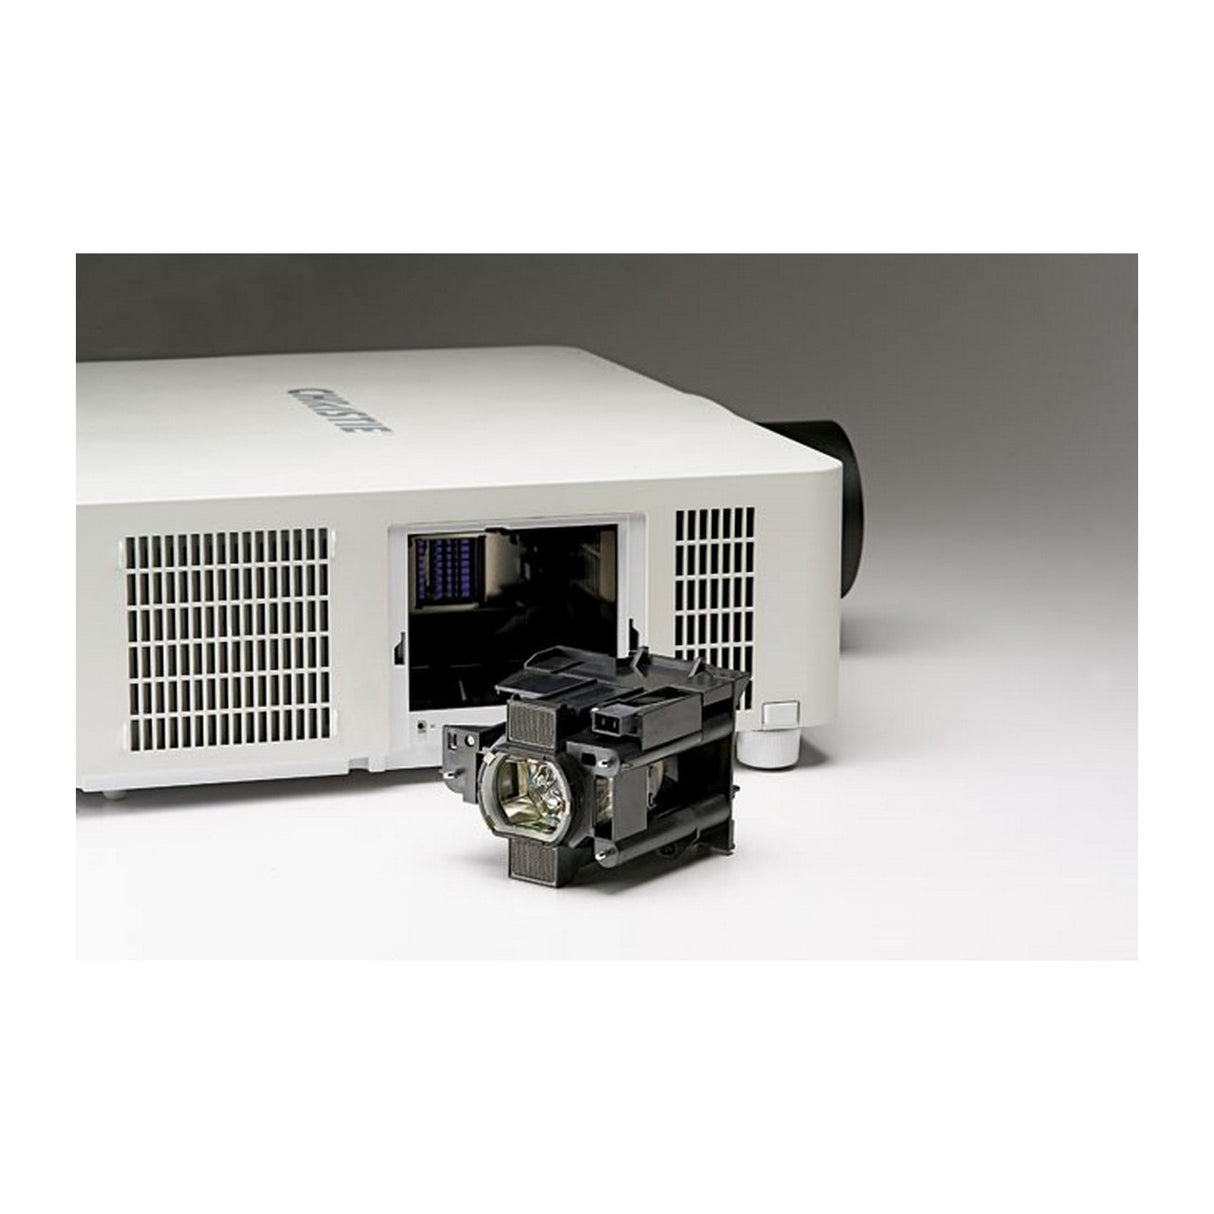 Christie LW551i | 3LCD WXGA 5500 Lumen Projector White with Lens